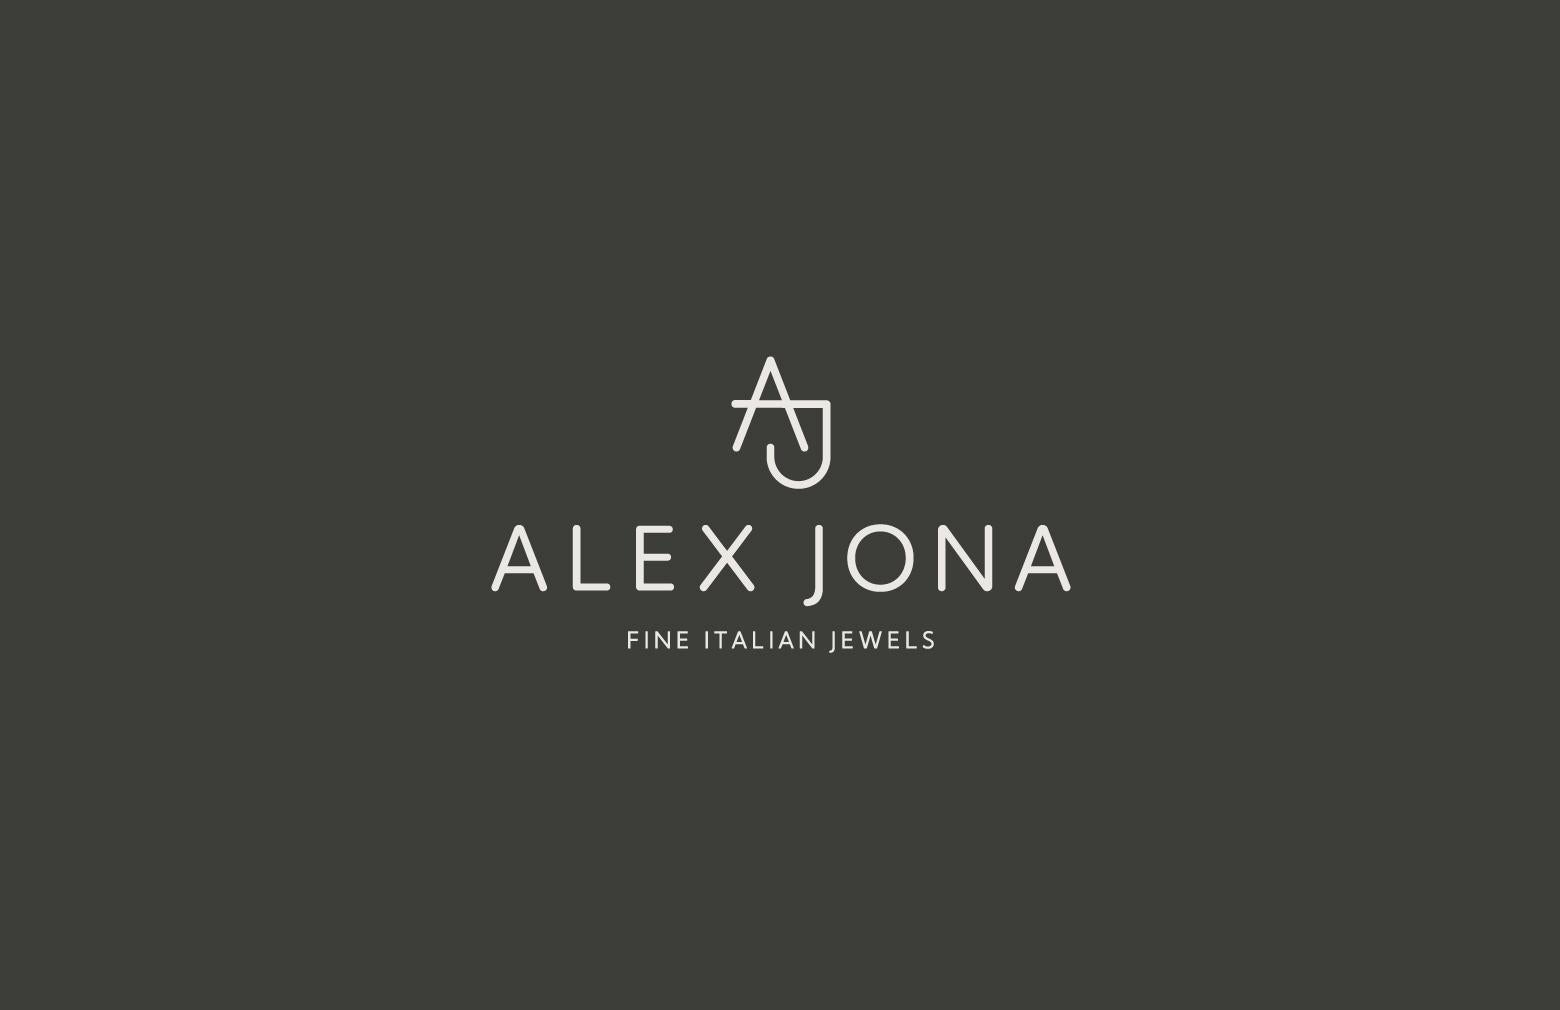 Alex Jona Free-Form 18 Karat Rose Gold Link Necklace with White Diamond Link 11